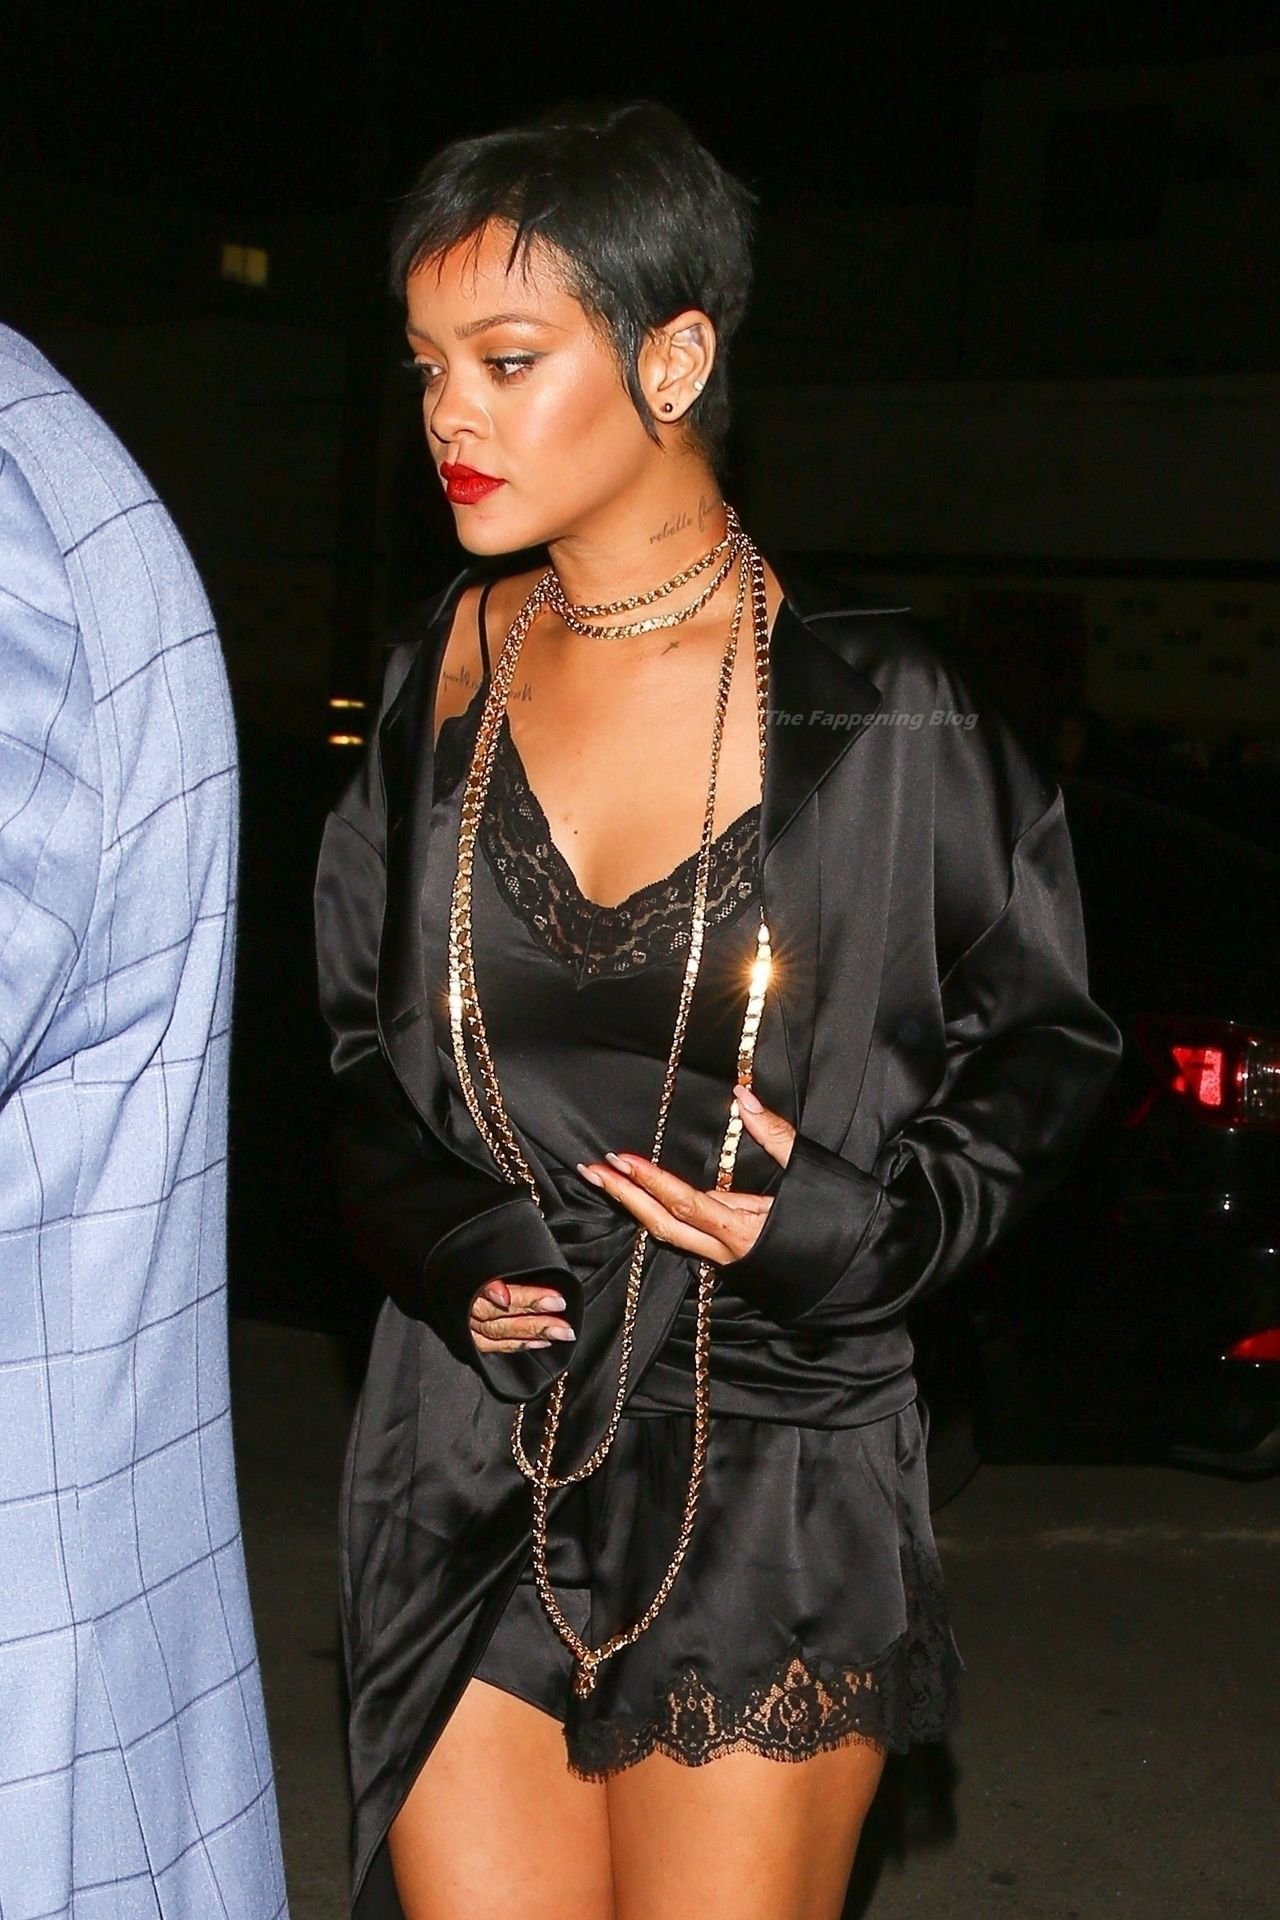 Rihanna-Sexy-The-Fappening-Blog-4.jpg